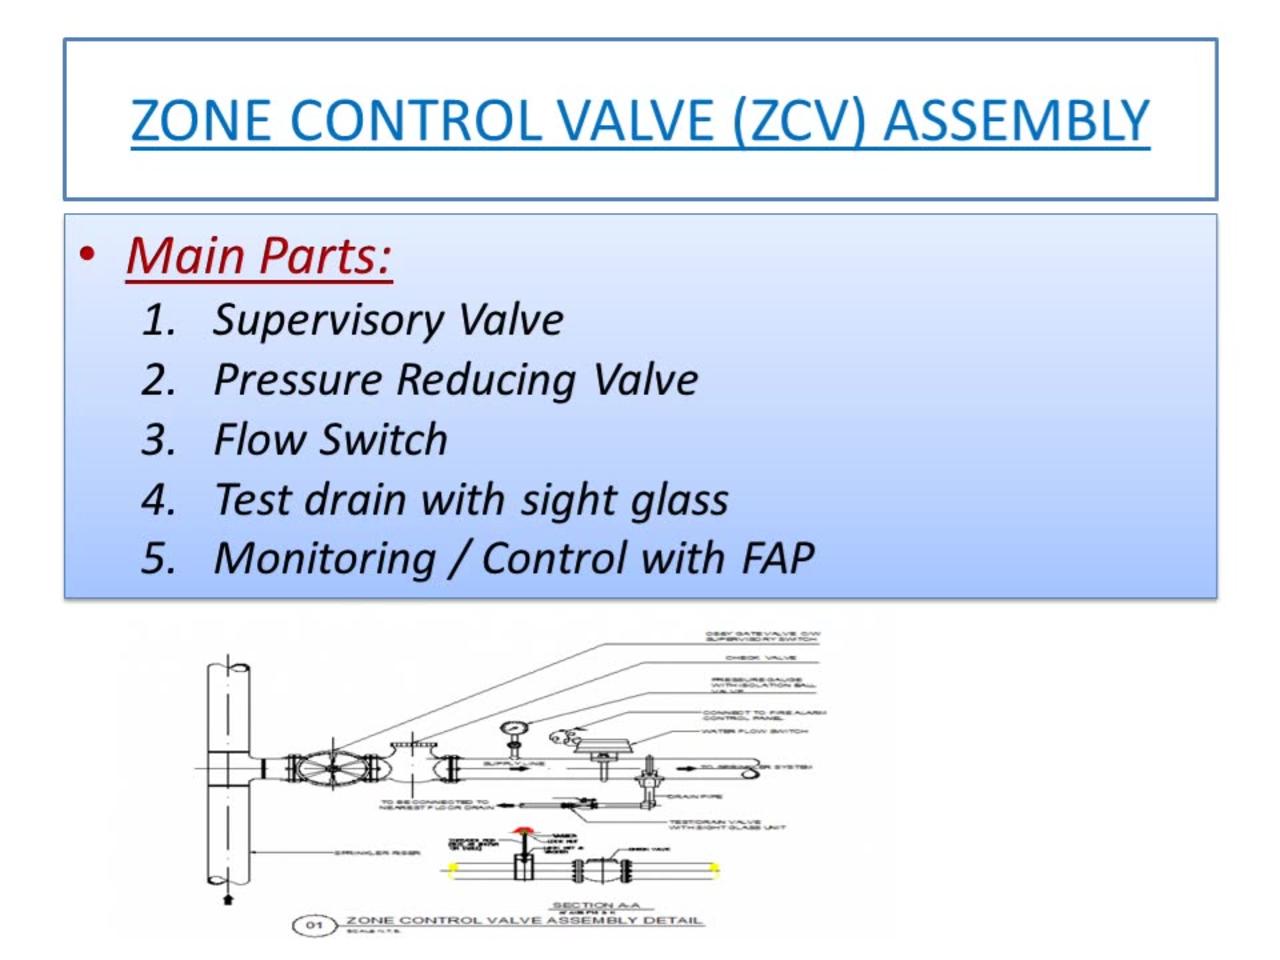 Zone Control Valve Assembly